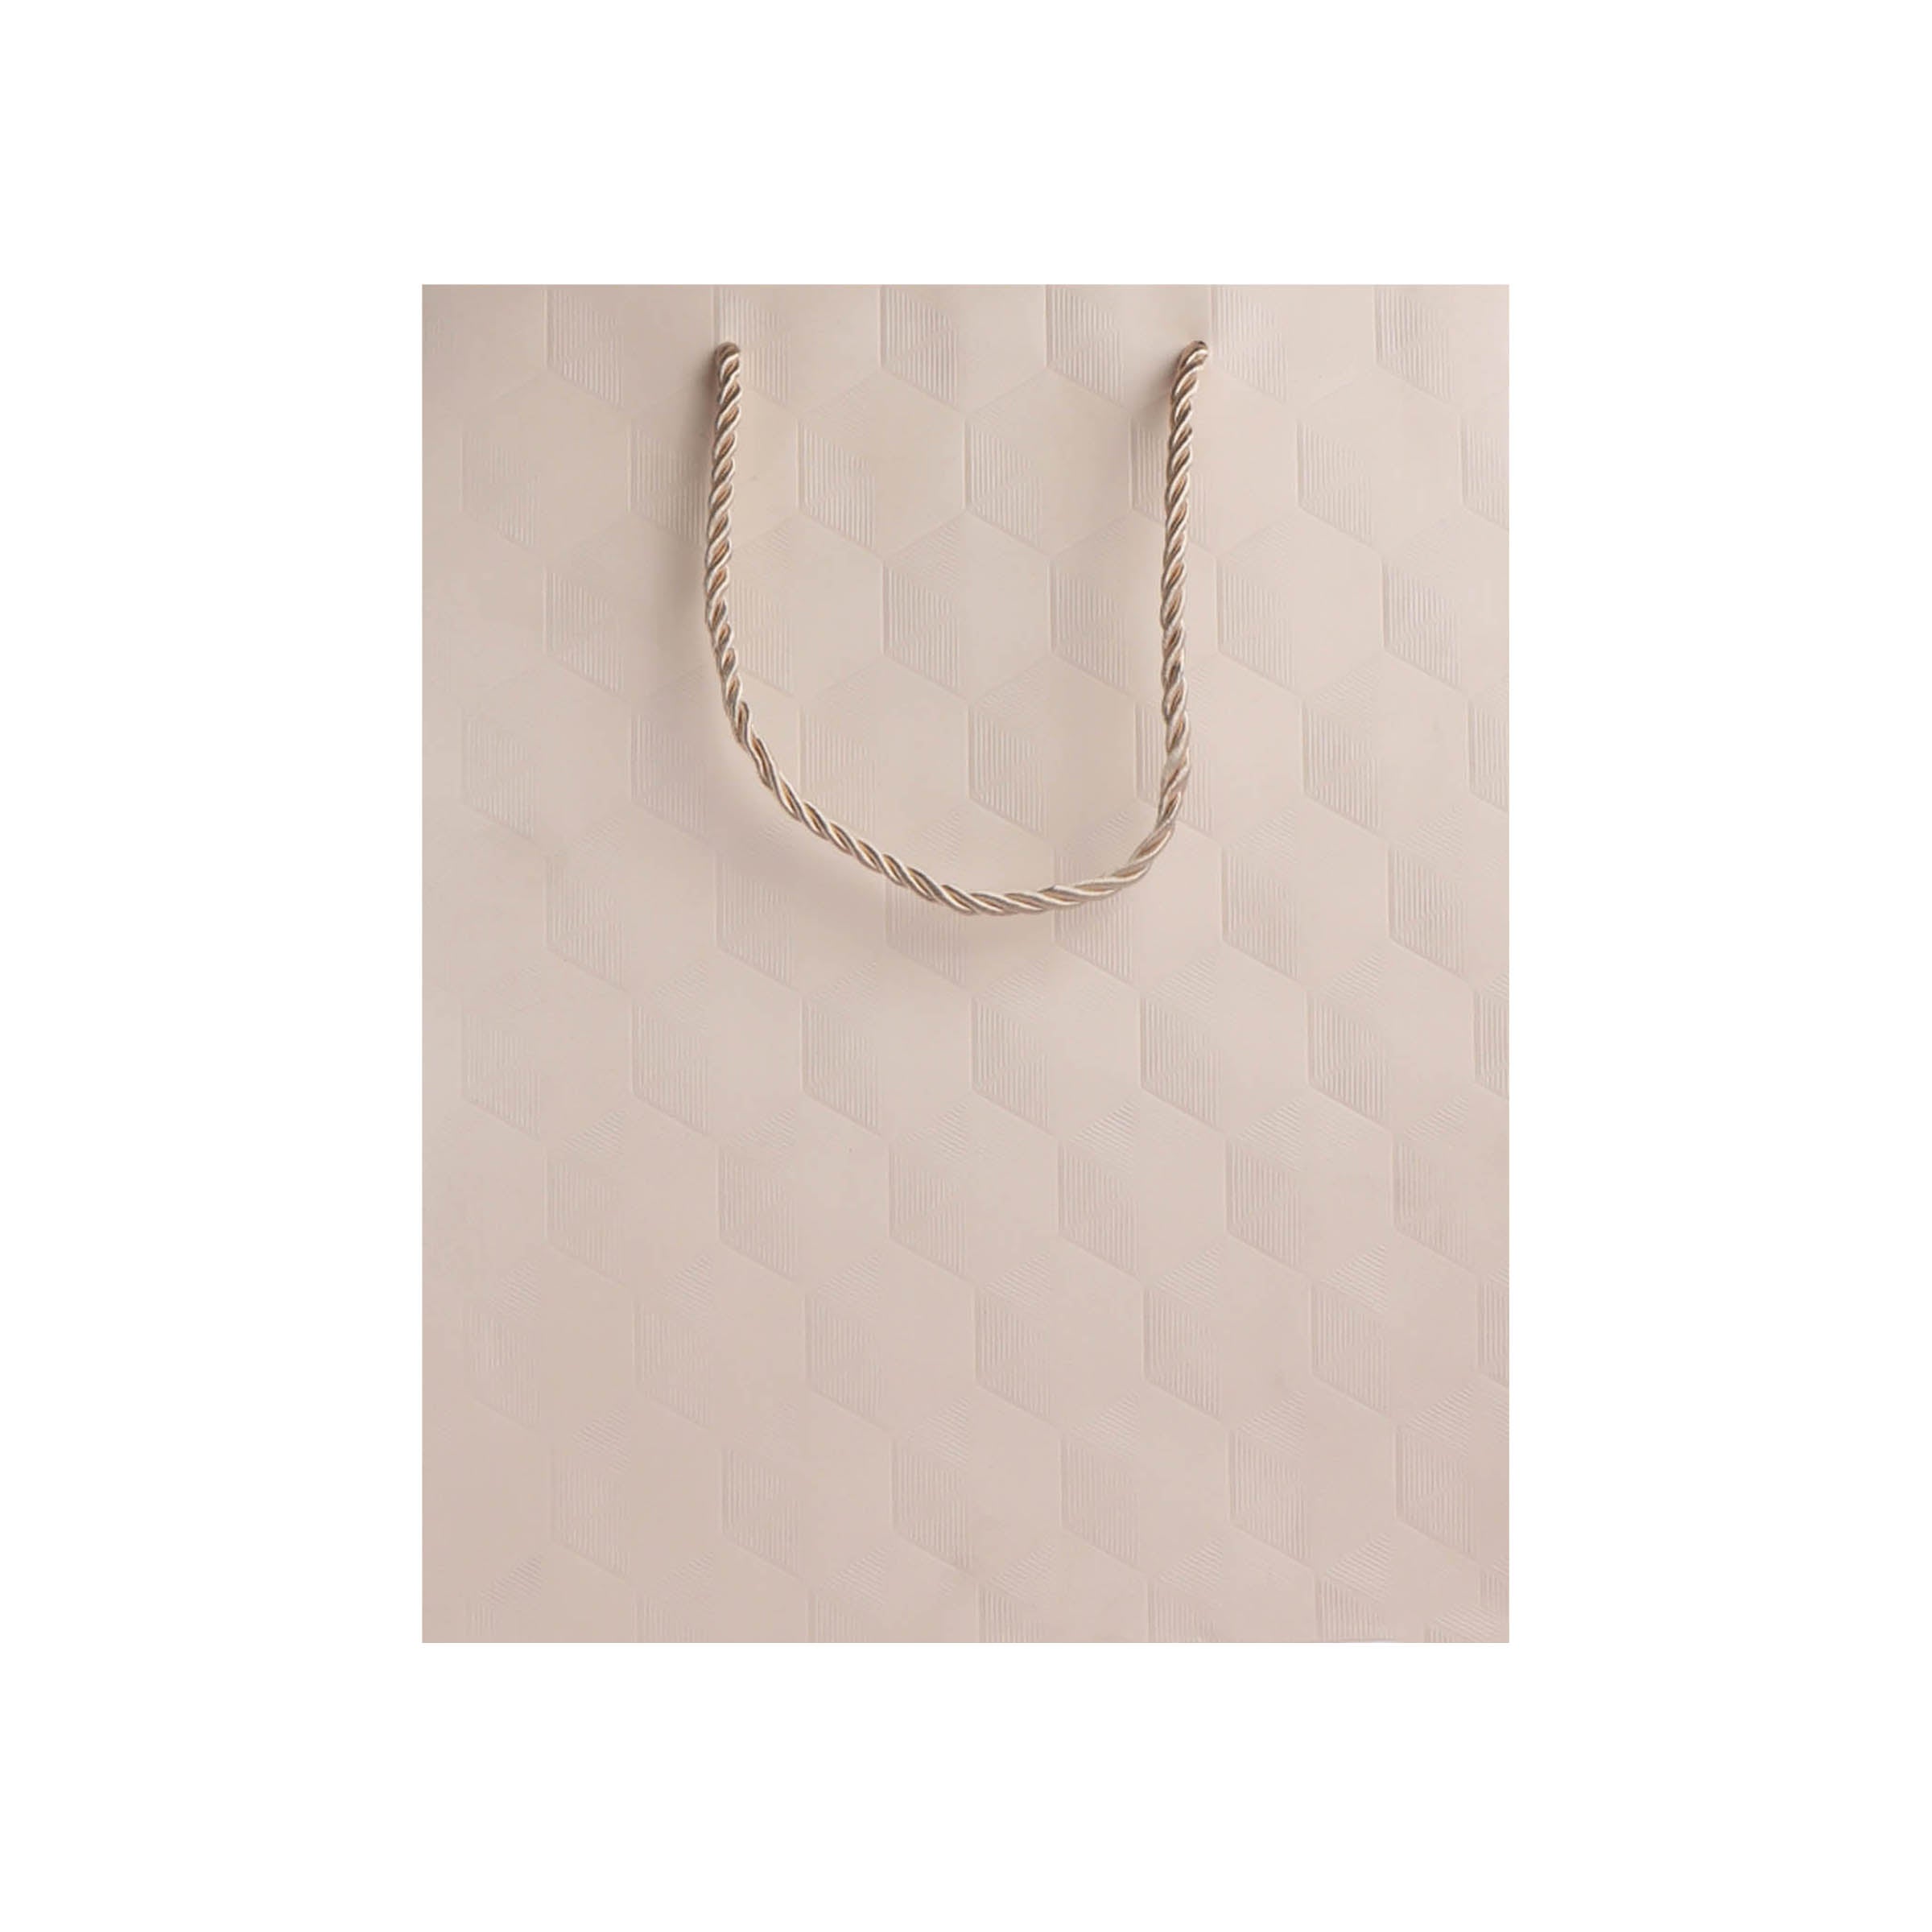 Gift Paper Bag Wave 18x23cm Medium